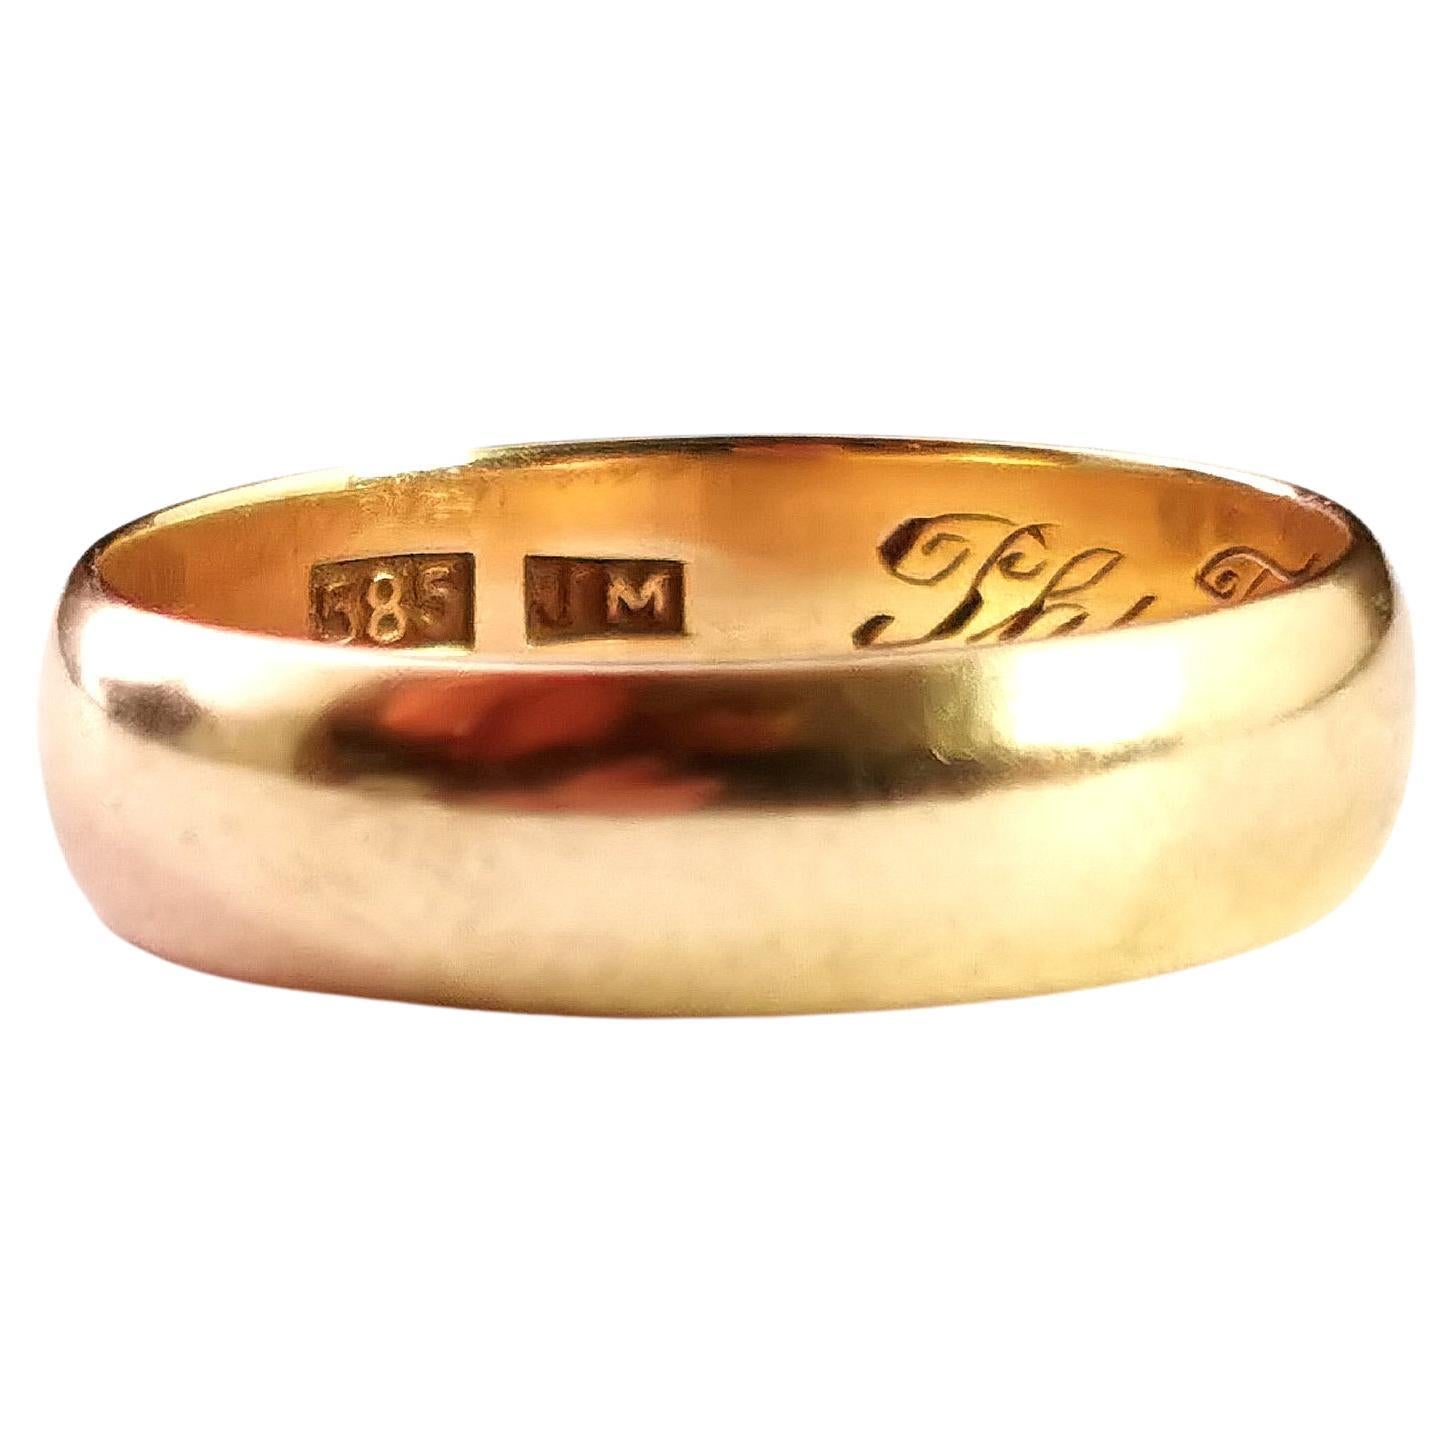 Antique 14k yellow gold wedding band ring, Engraved 